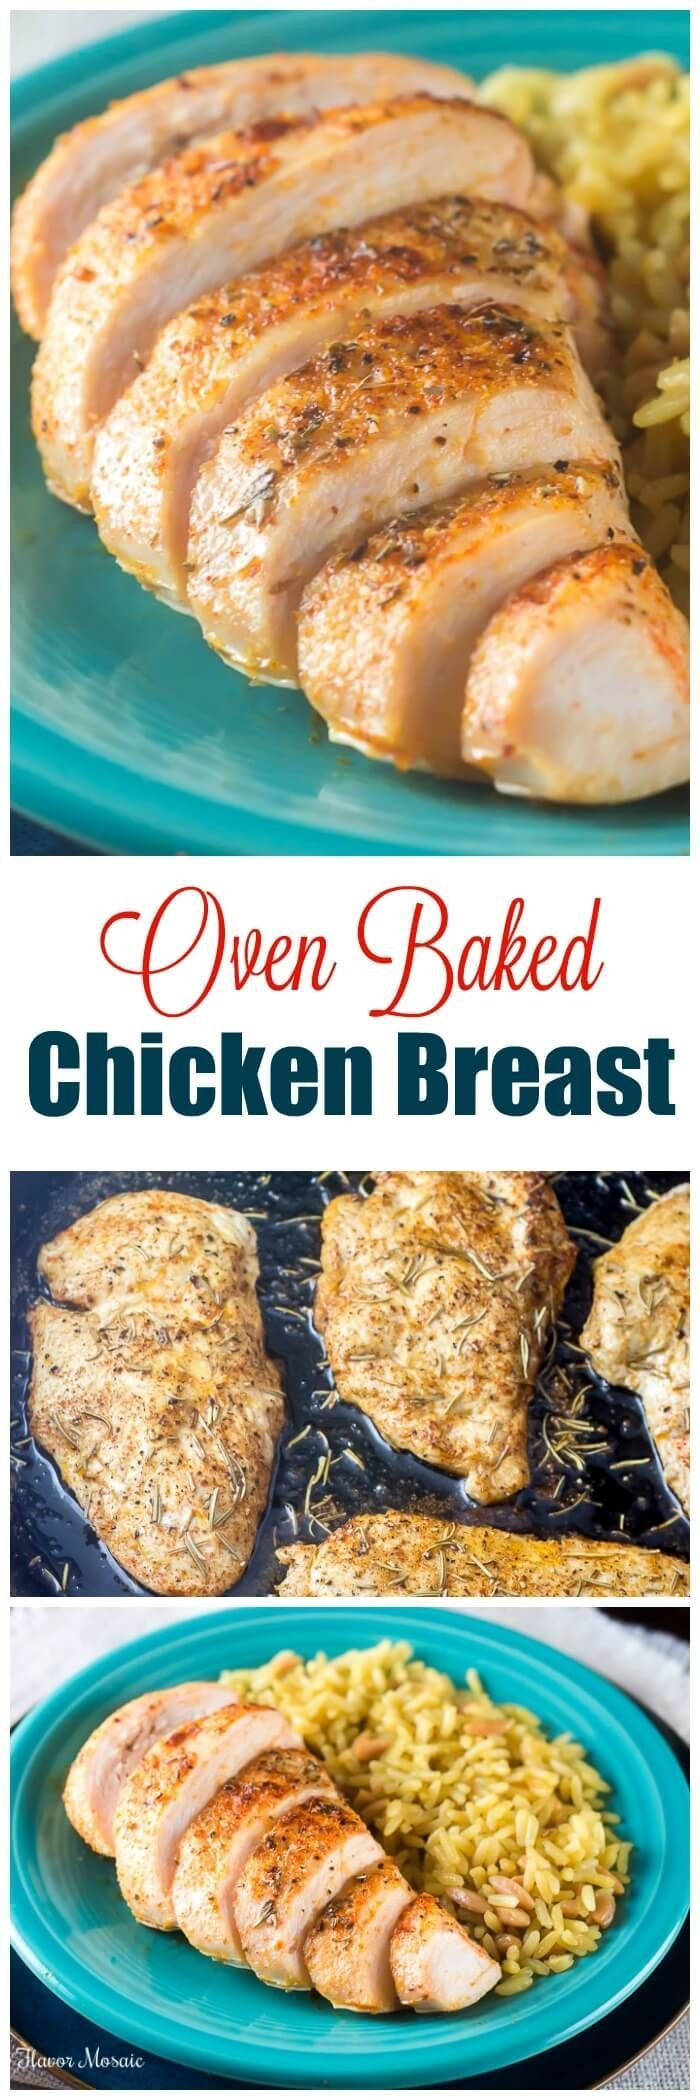 Baked Chicken Breast Ideas
 25 best ideas about Baked chicken breast on Pinterest